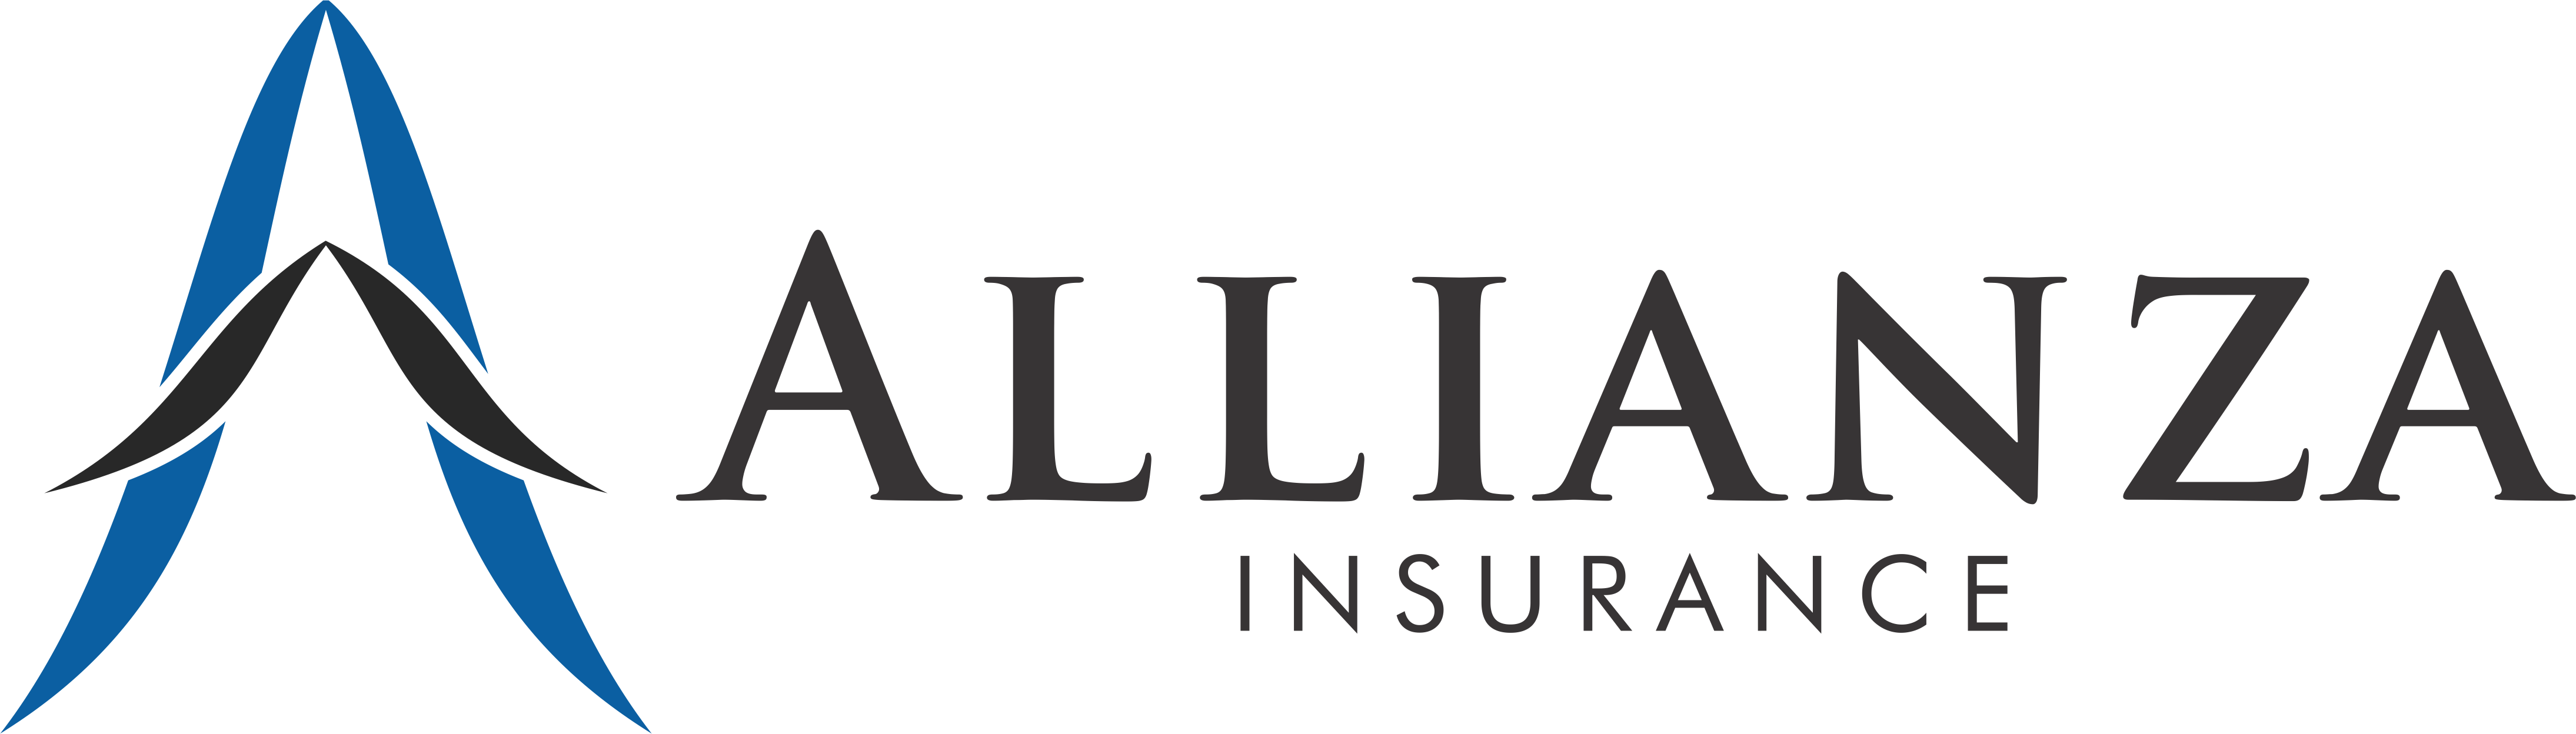 NJ Small Business Insurance Solutions | Allianza Insurance Professionals